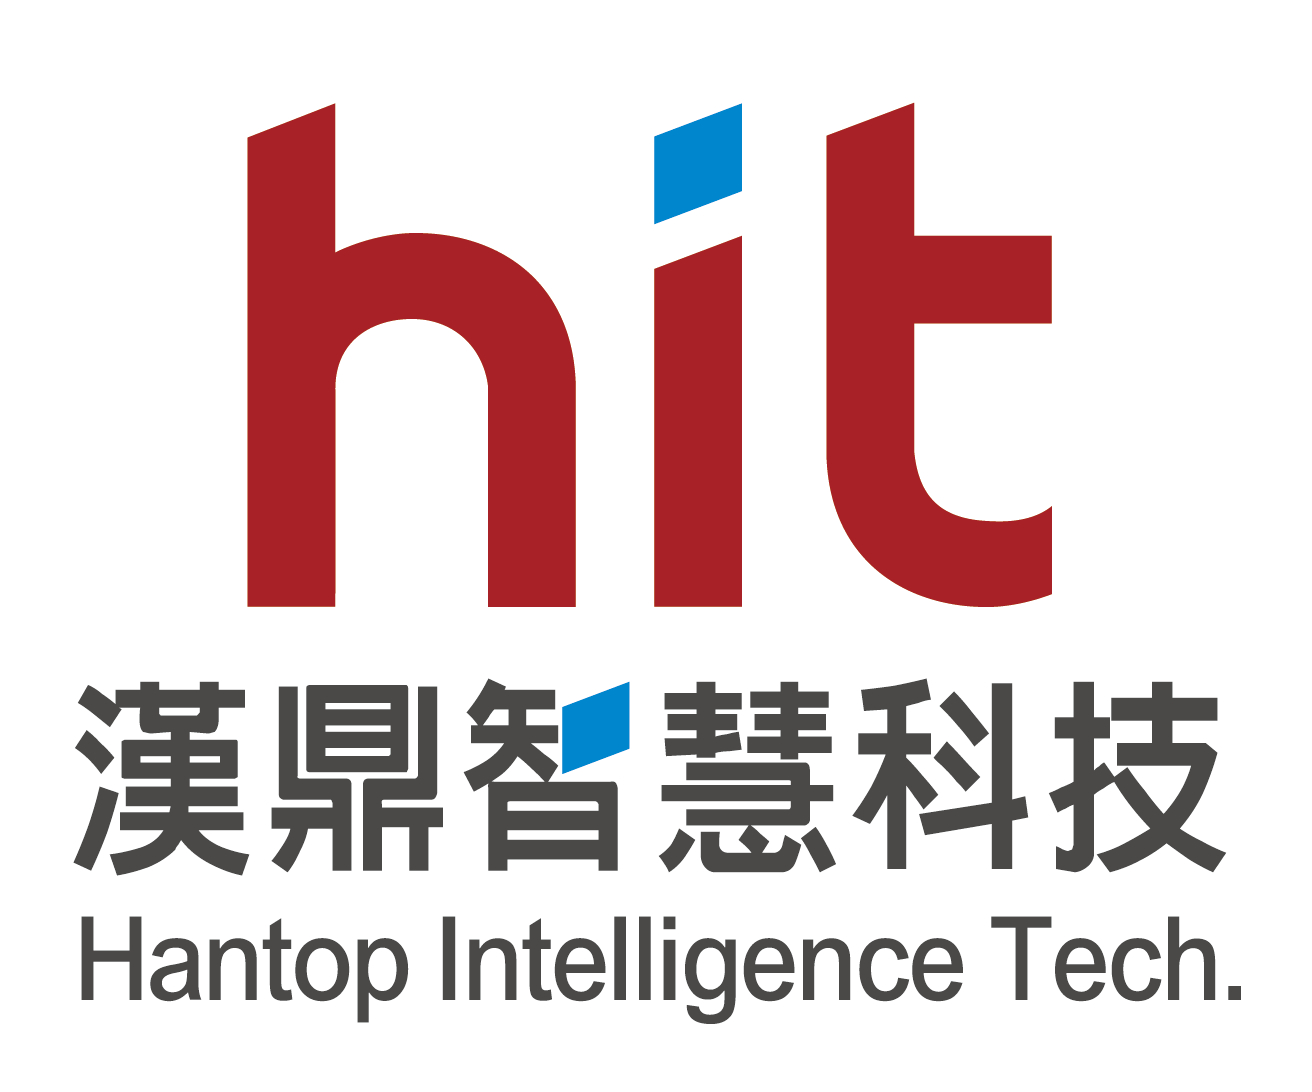 Hantop Intelligence Technology